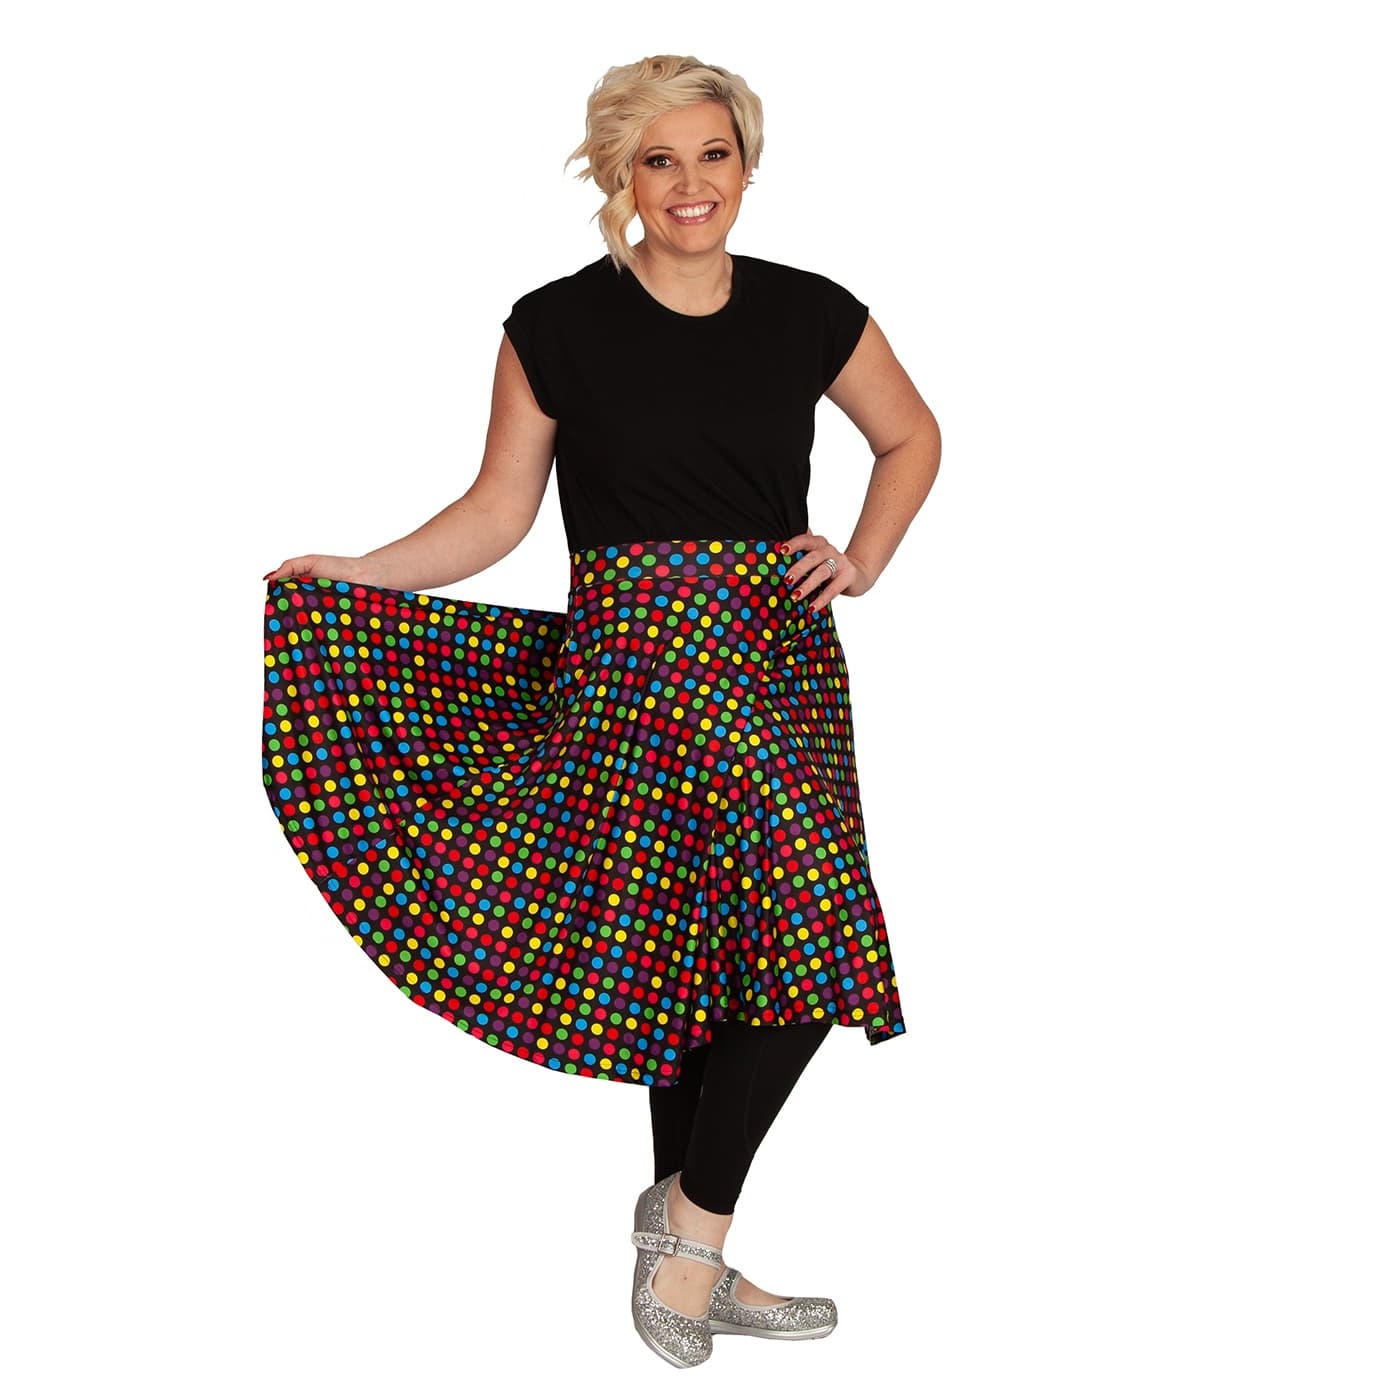 Confetti Swishy Skirt by RainbowsAndFairies.com.au (Rainbow Spots - Polka Dots - Colourful - Circle Skirt With Pockets - Mod Retro) - SKU: CL_SWISH_CONFT_ORG - Pic-08